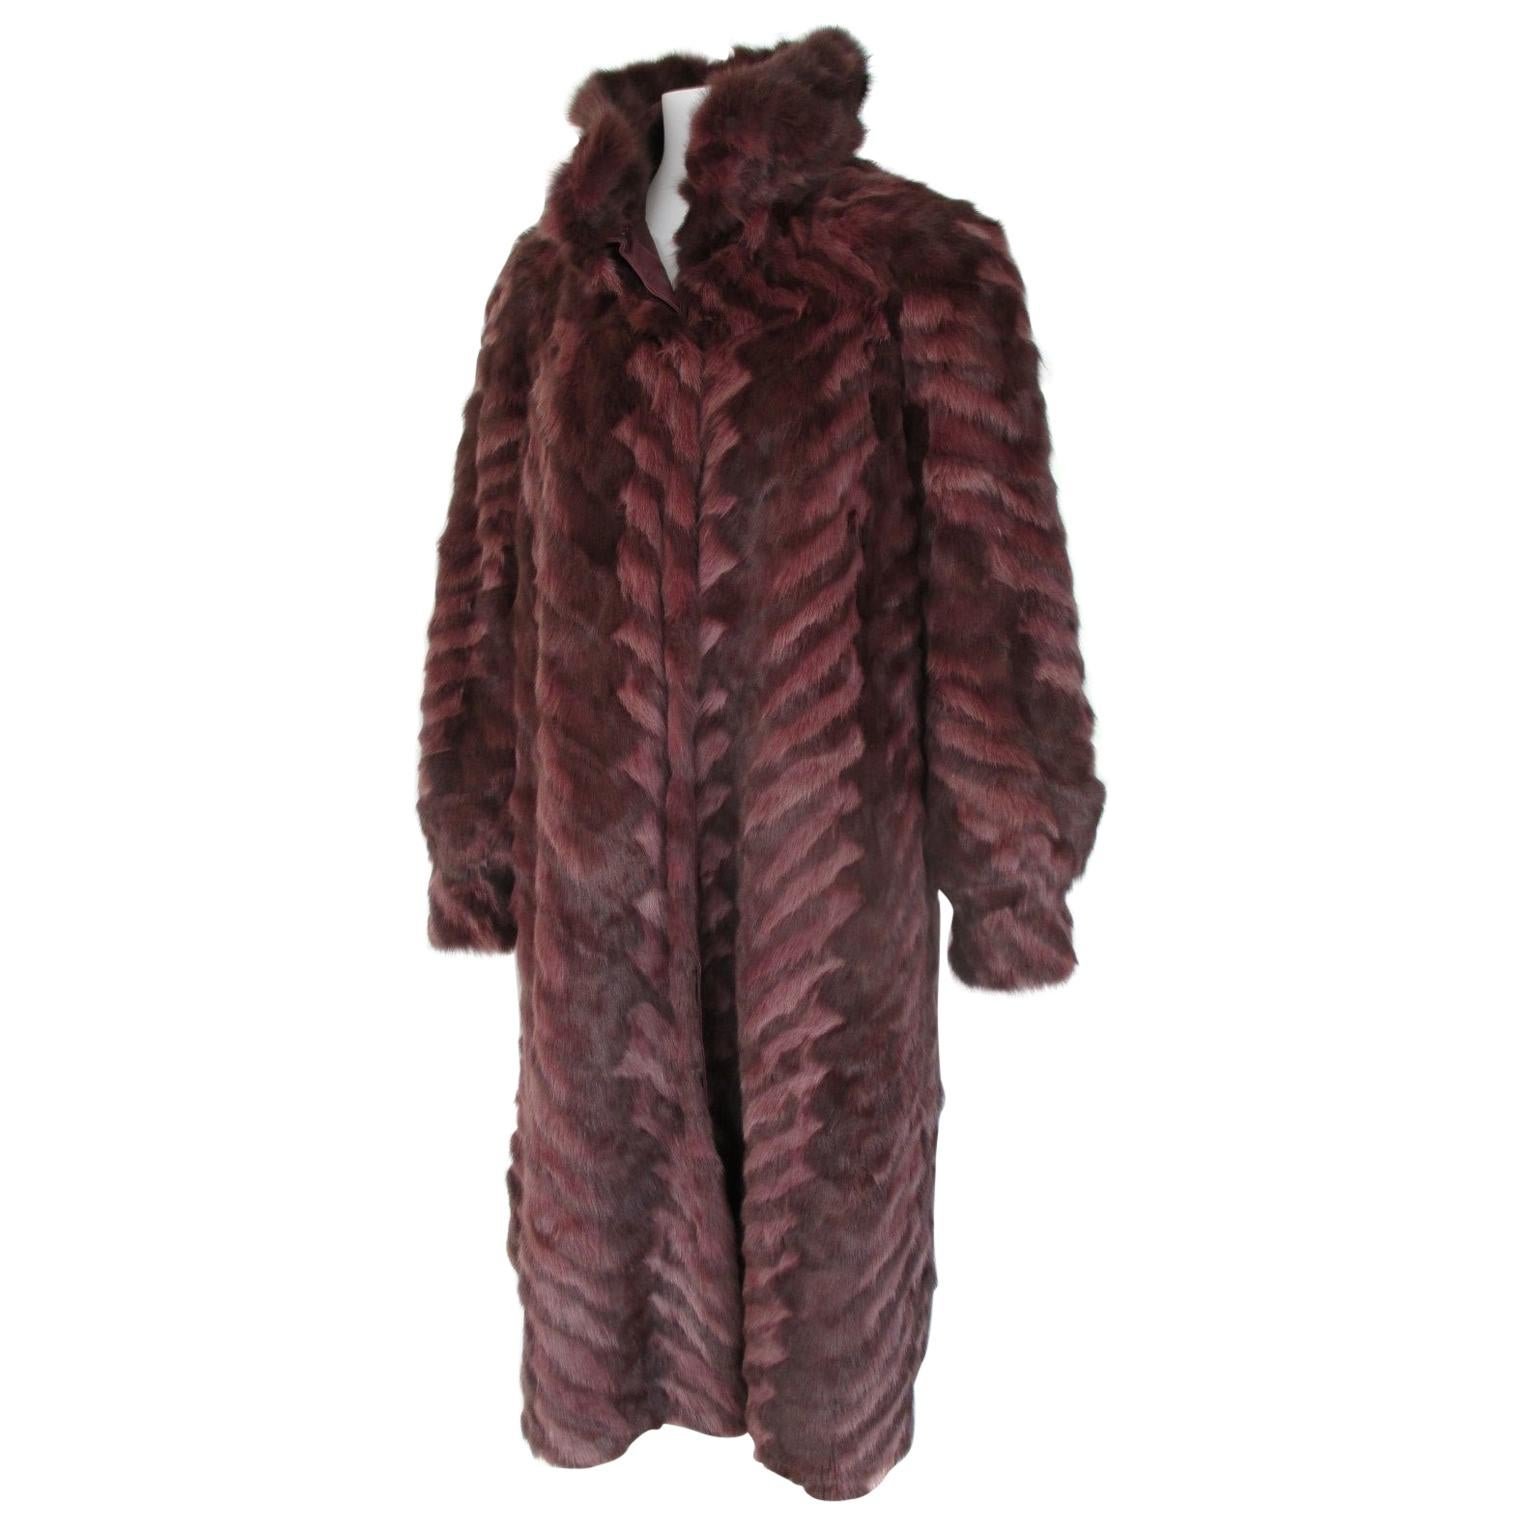 Reversible Bordeaux Long Fur and Leather Snake Print Coat